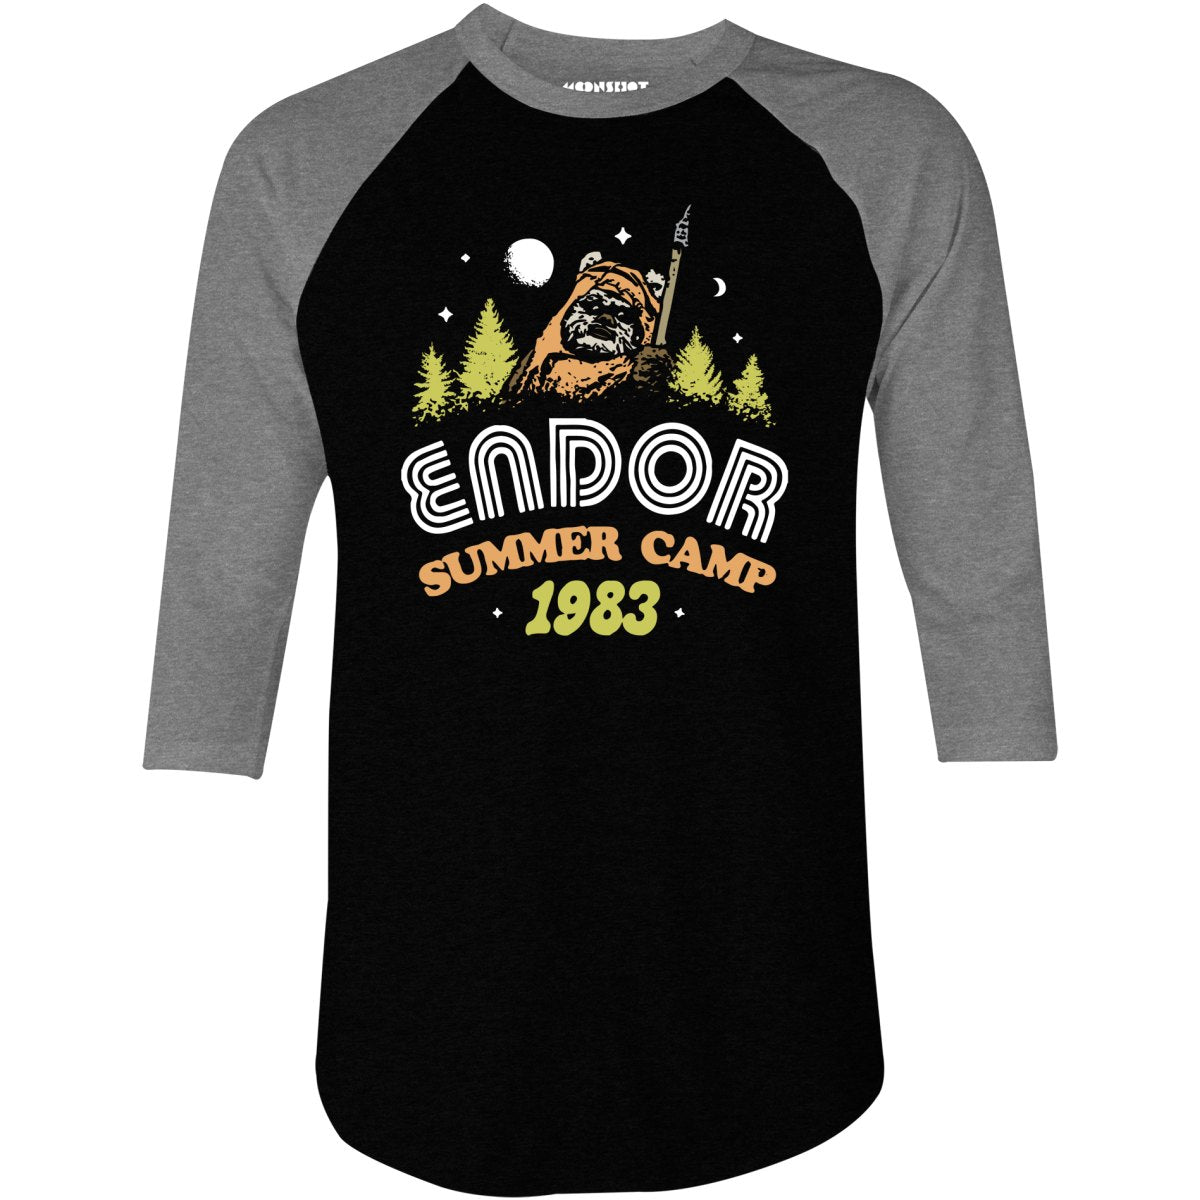 Endor Summer Camp - 3/4 Sleeve Raglan T-Shirt